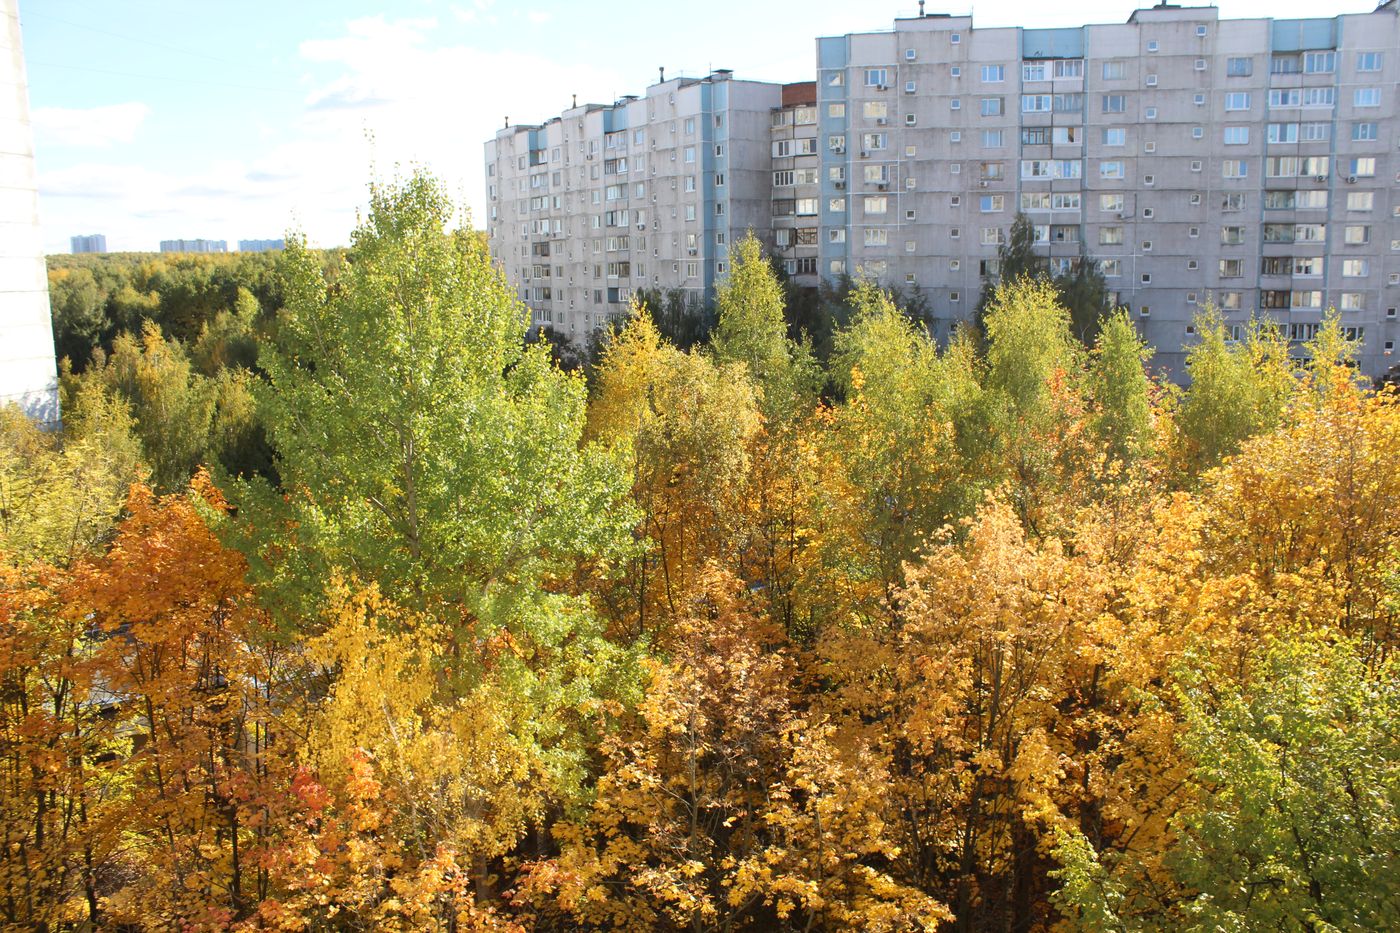 Заказник "Теплый Стан", image of landscape/habitat.